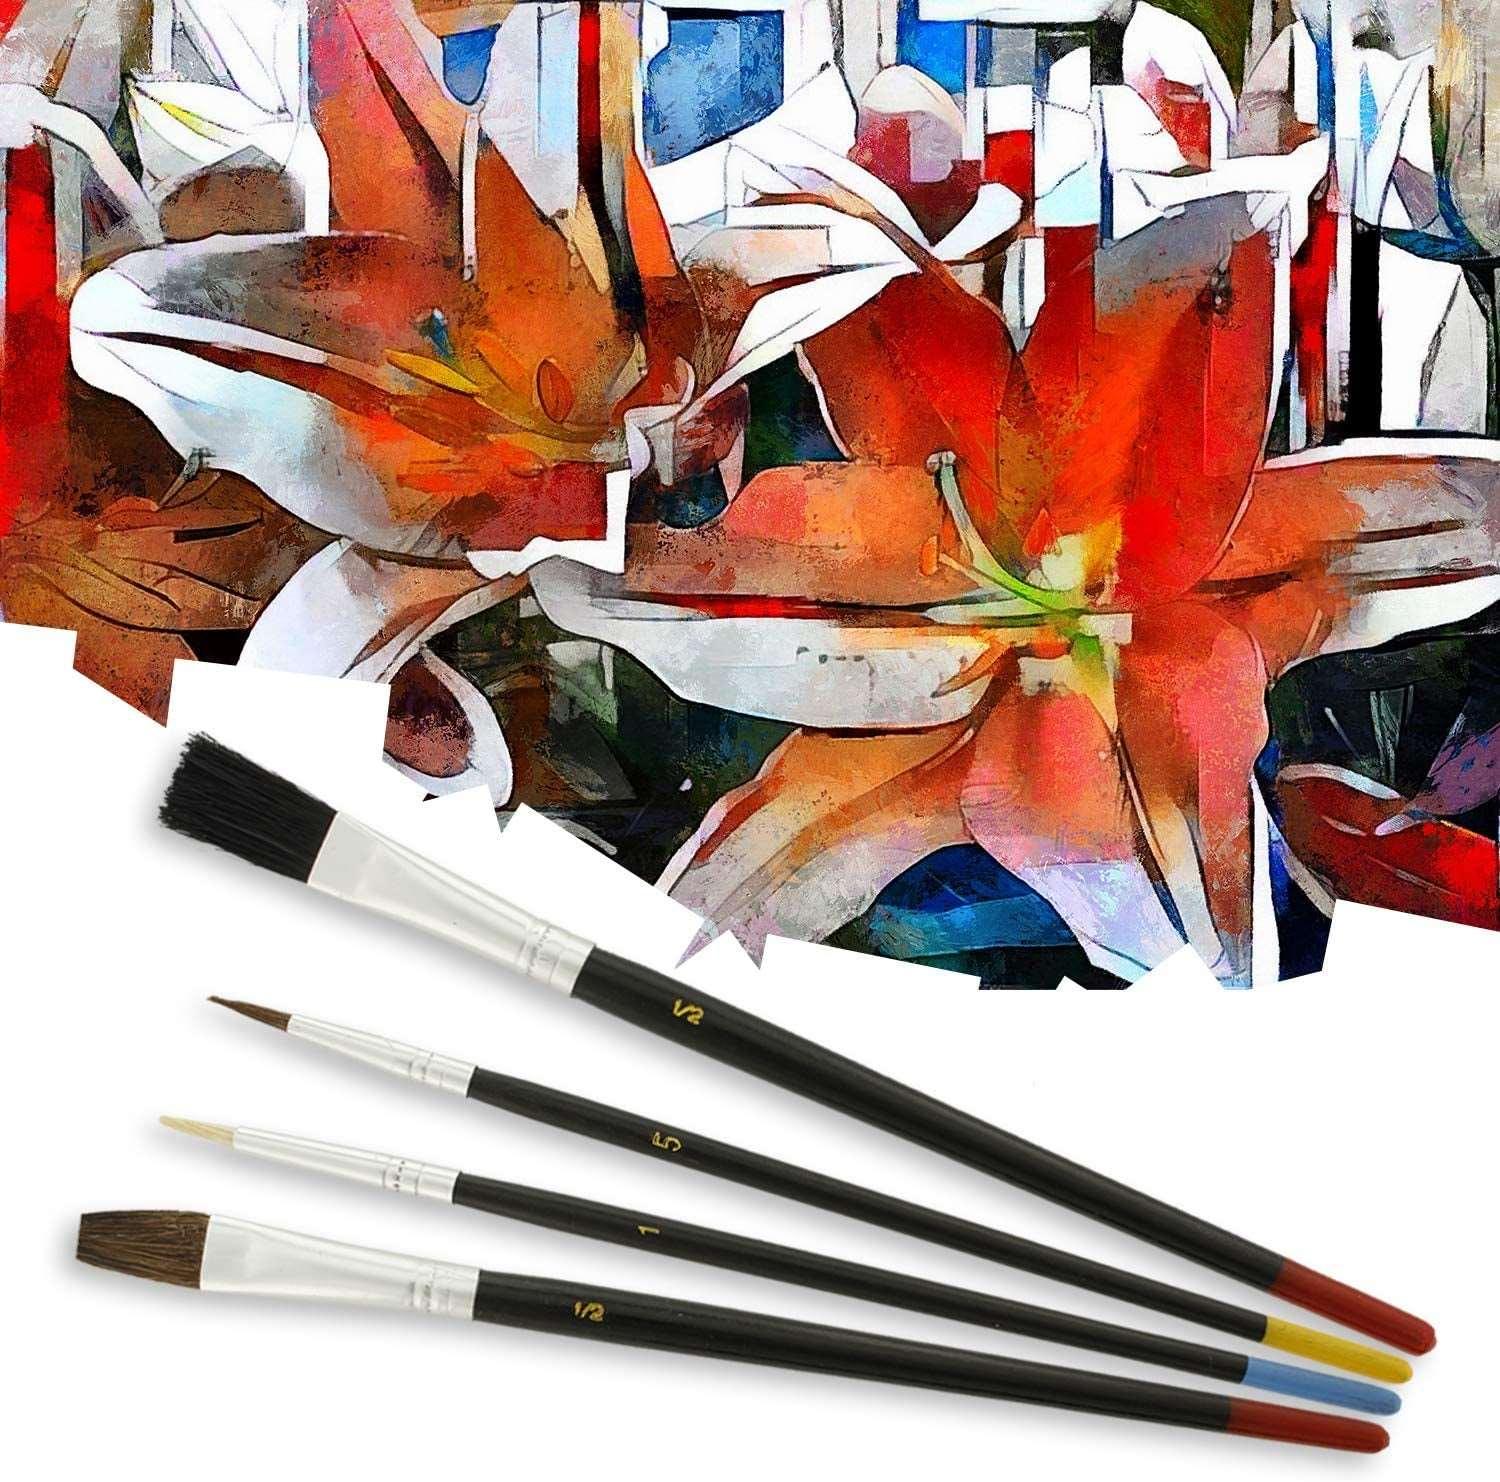 24 Pcs Artist Paint Brush Set Carry Pouch for Watercolor, Acrylic